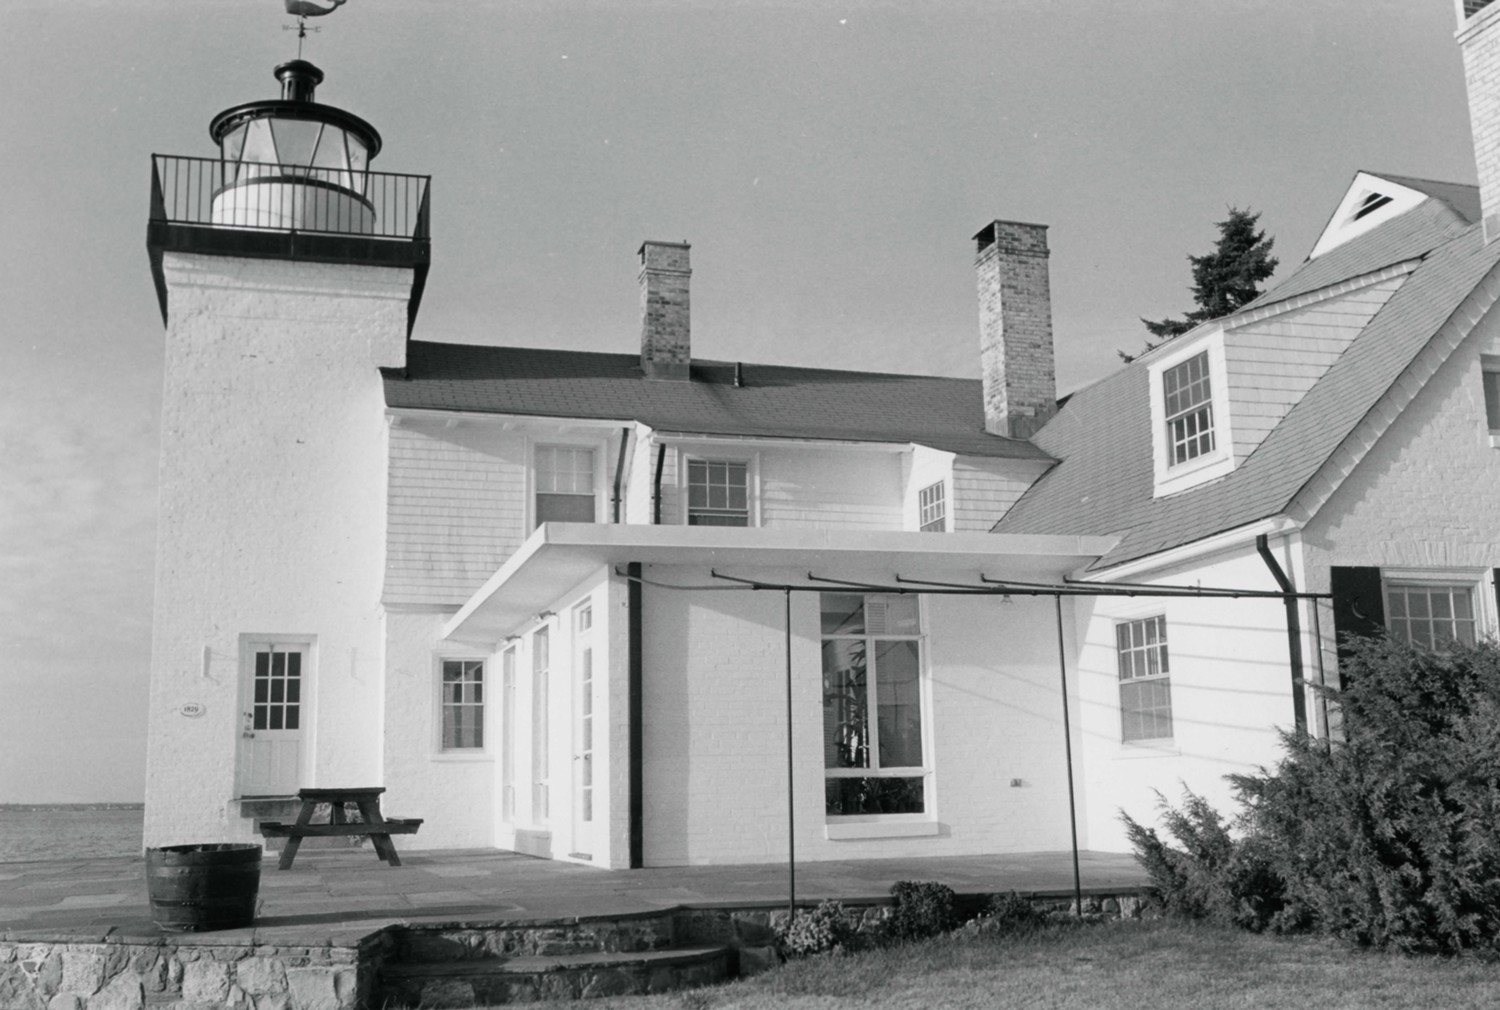 Nayatt Point Lighthouse, Barrington Rhode Island Light and keeper's dwelling, facing north (1984)